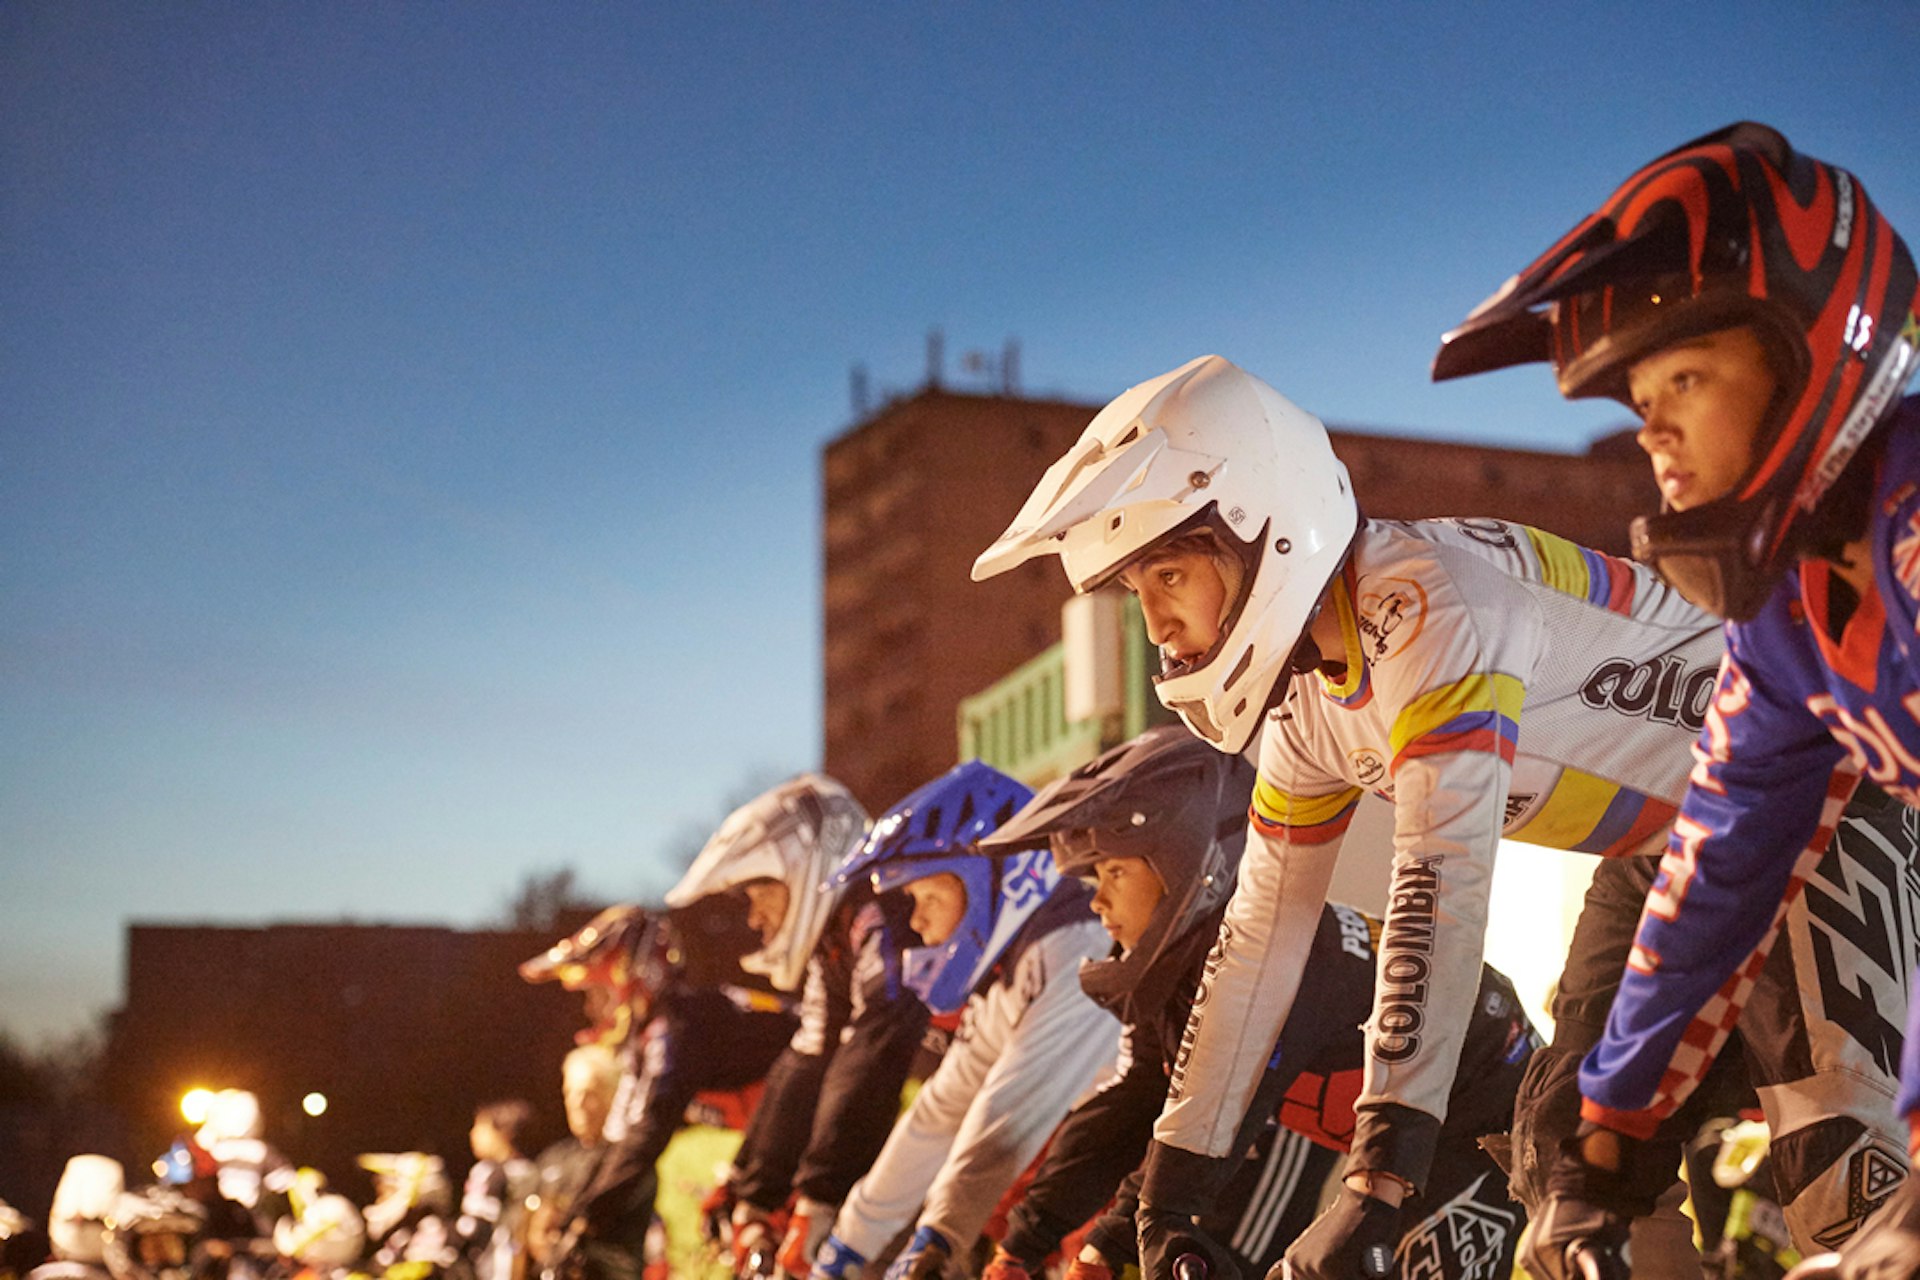 Peckham BMX riders by photographer Samuel Hicks